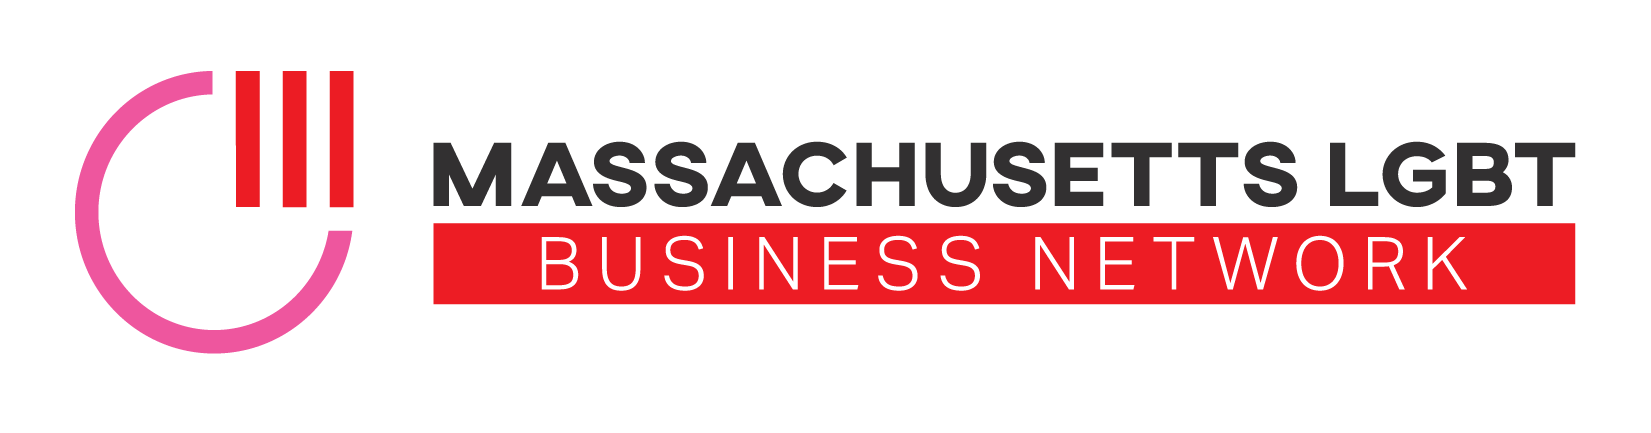 Massachusetts LGBT Business Network logo